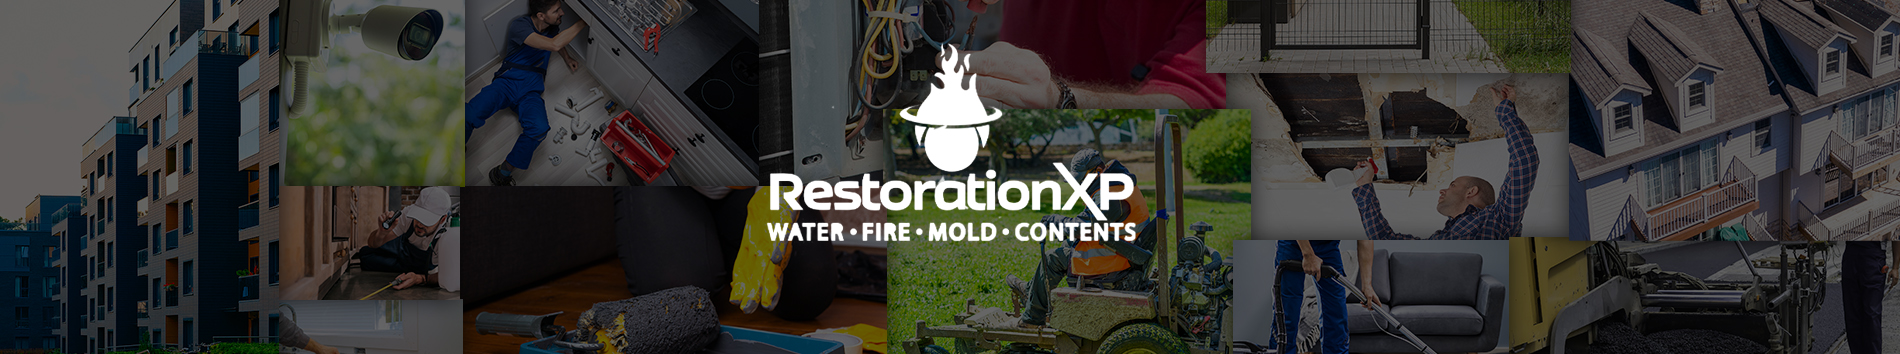 RestorationXP